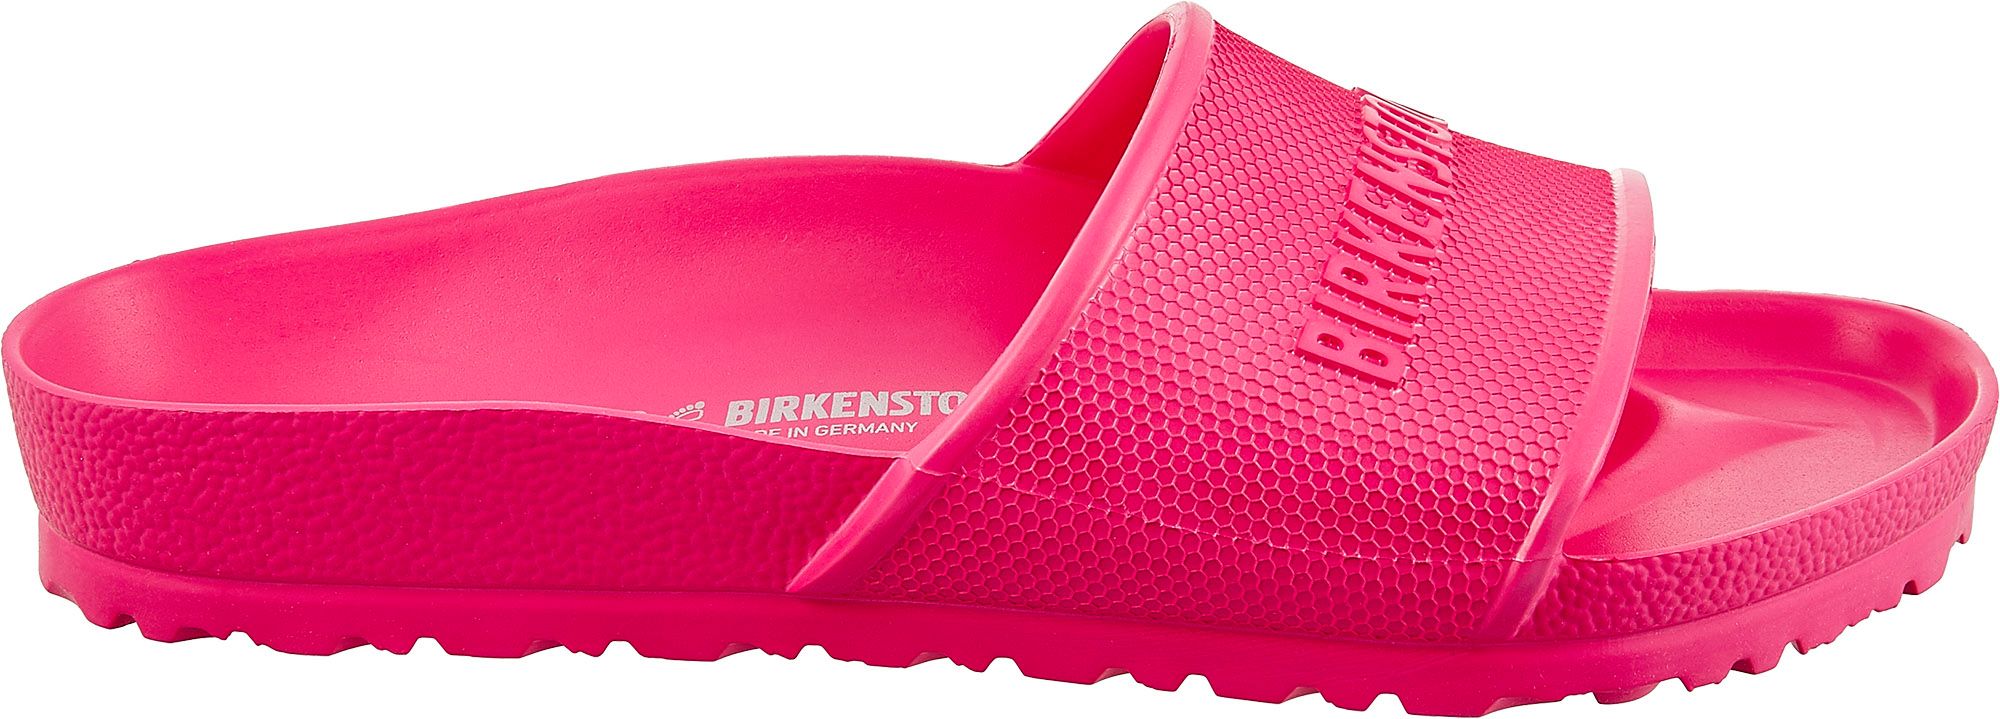 birkenstock women's slides